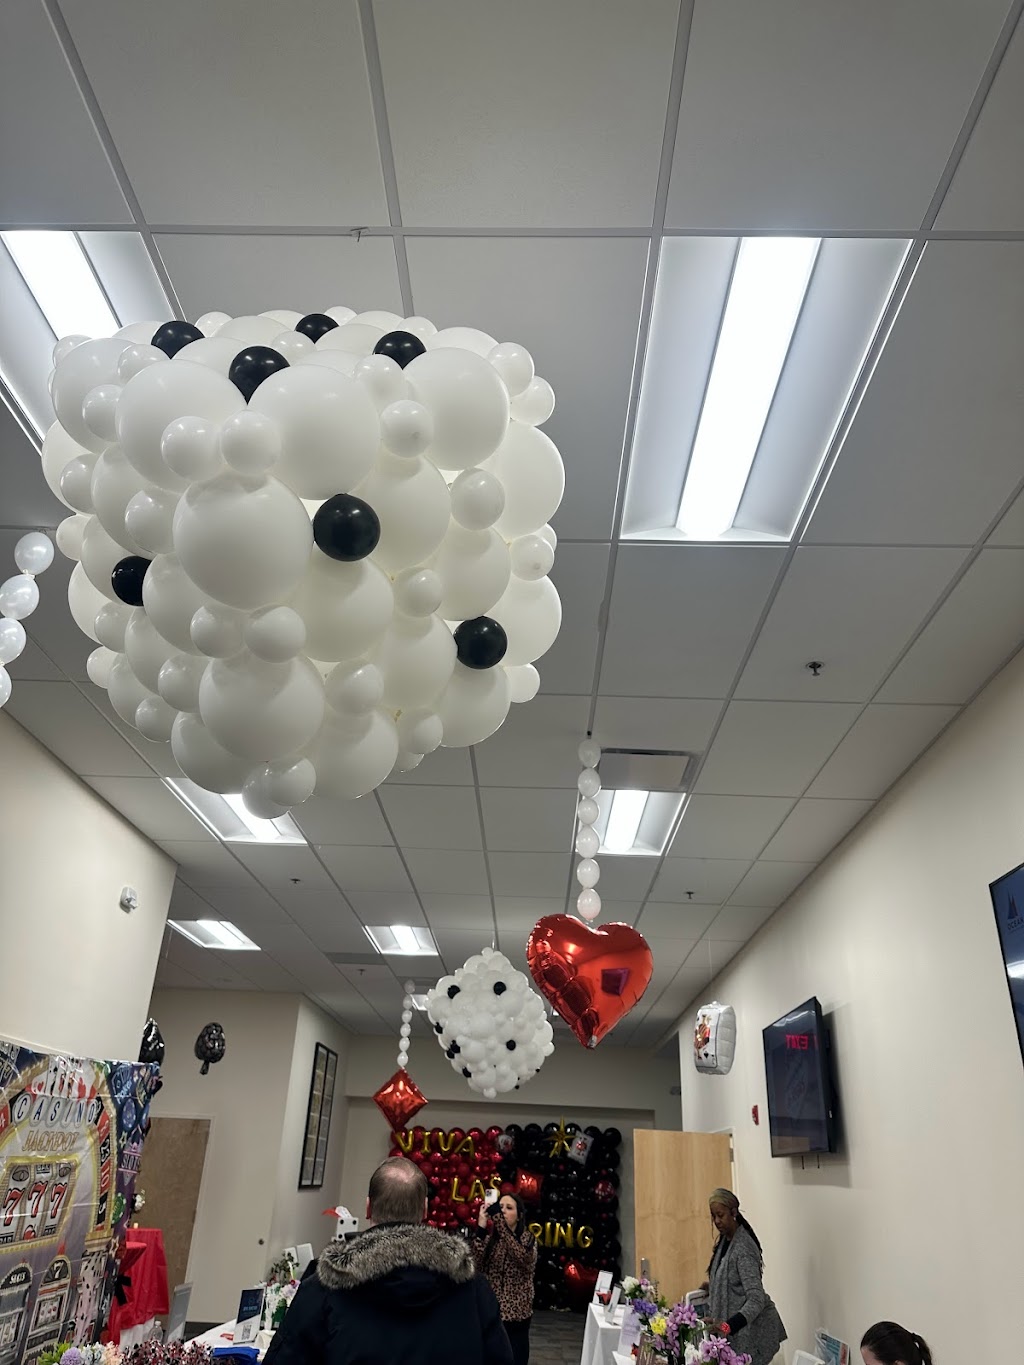 Celebration Creations Balloon Decorating Service | 420 N Main St, Stafford Township, NJ 08050 | Phone: (732) 378-9922